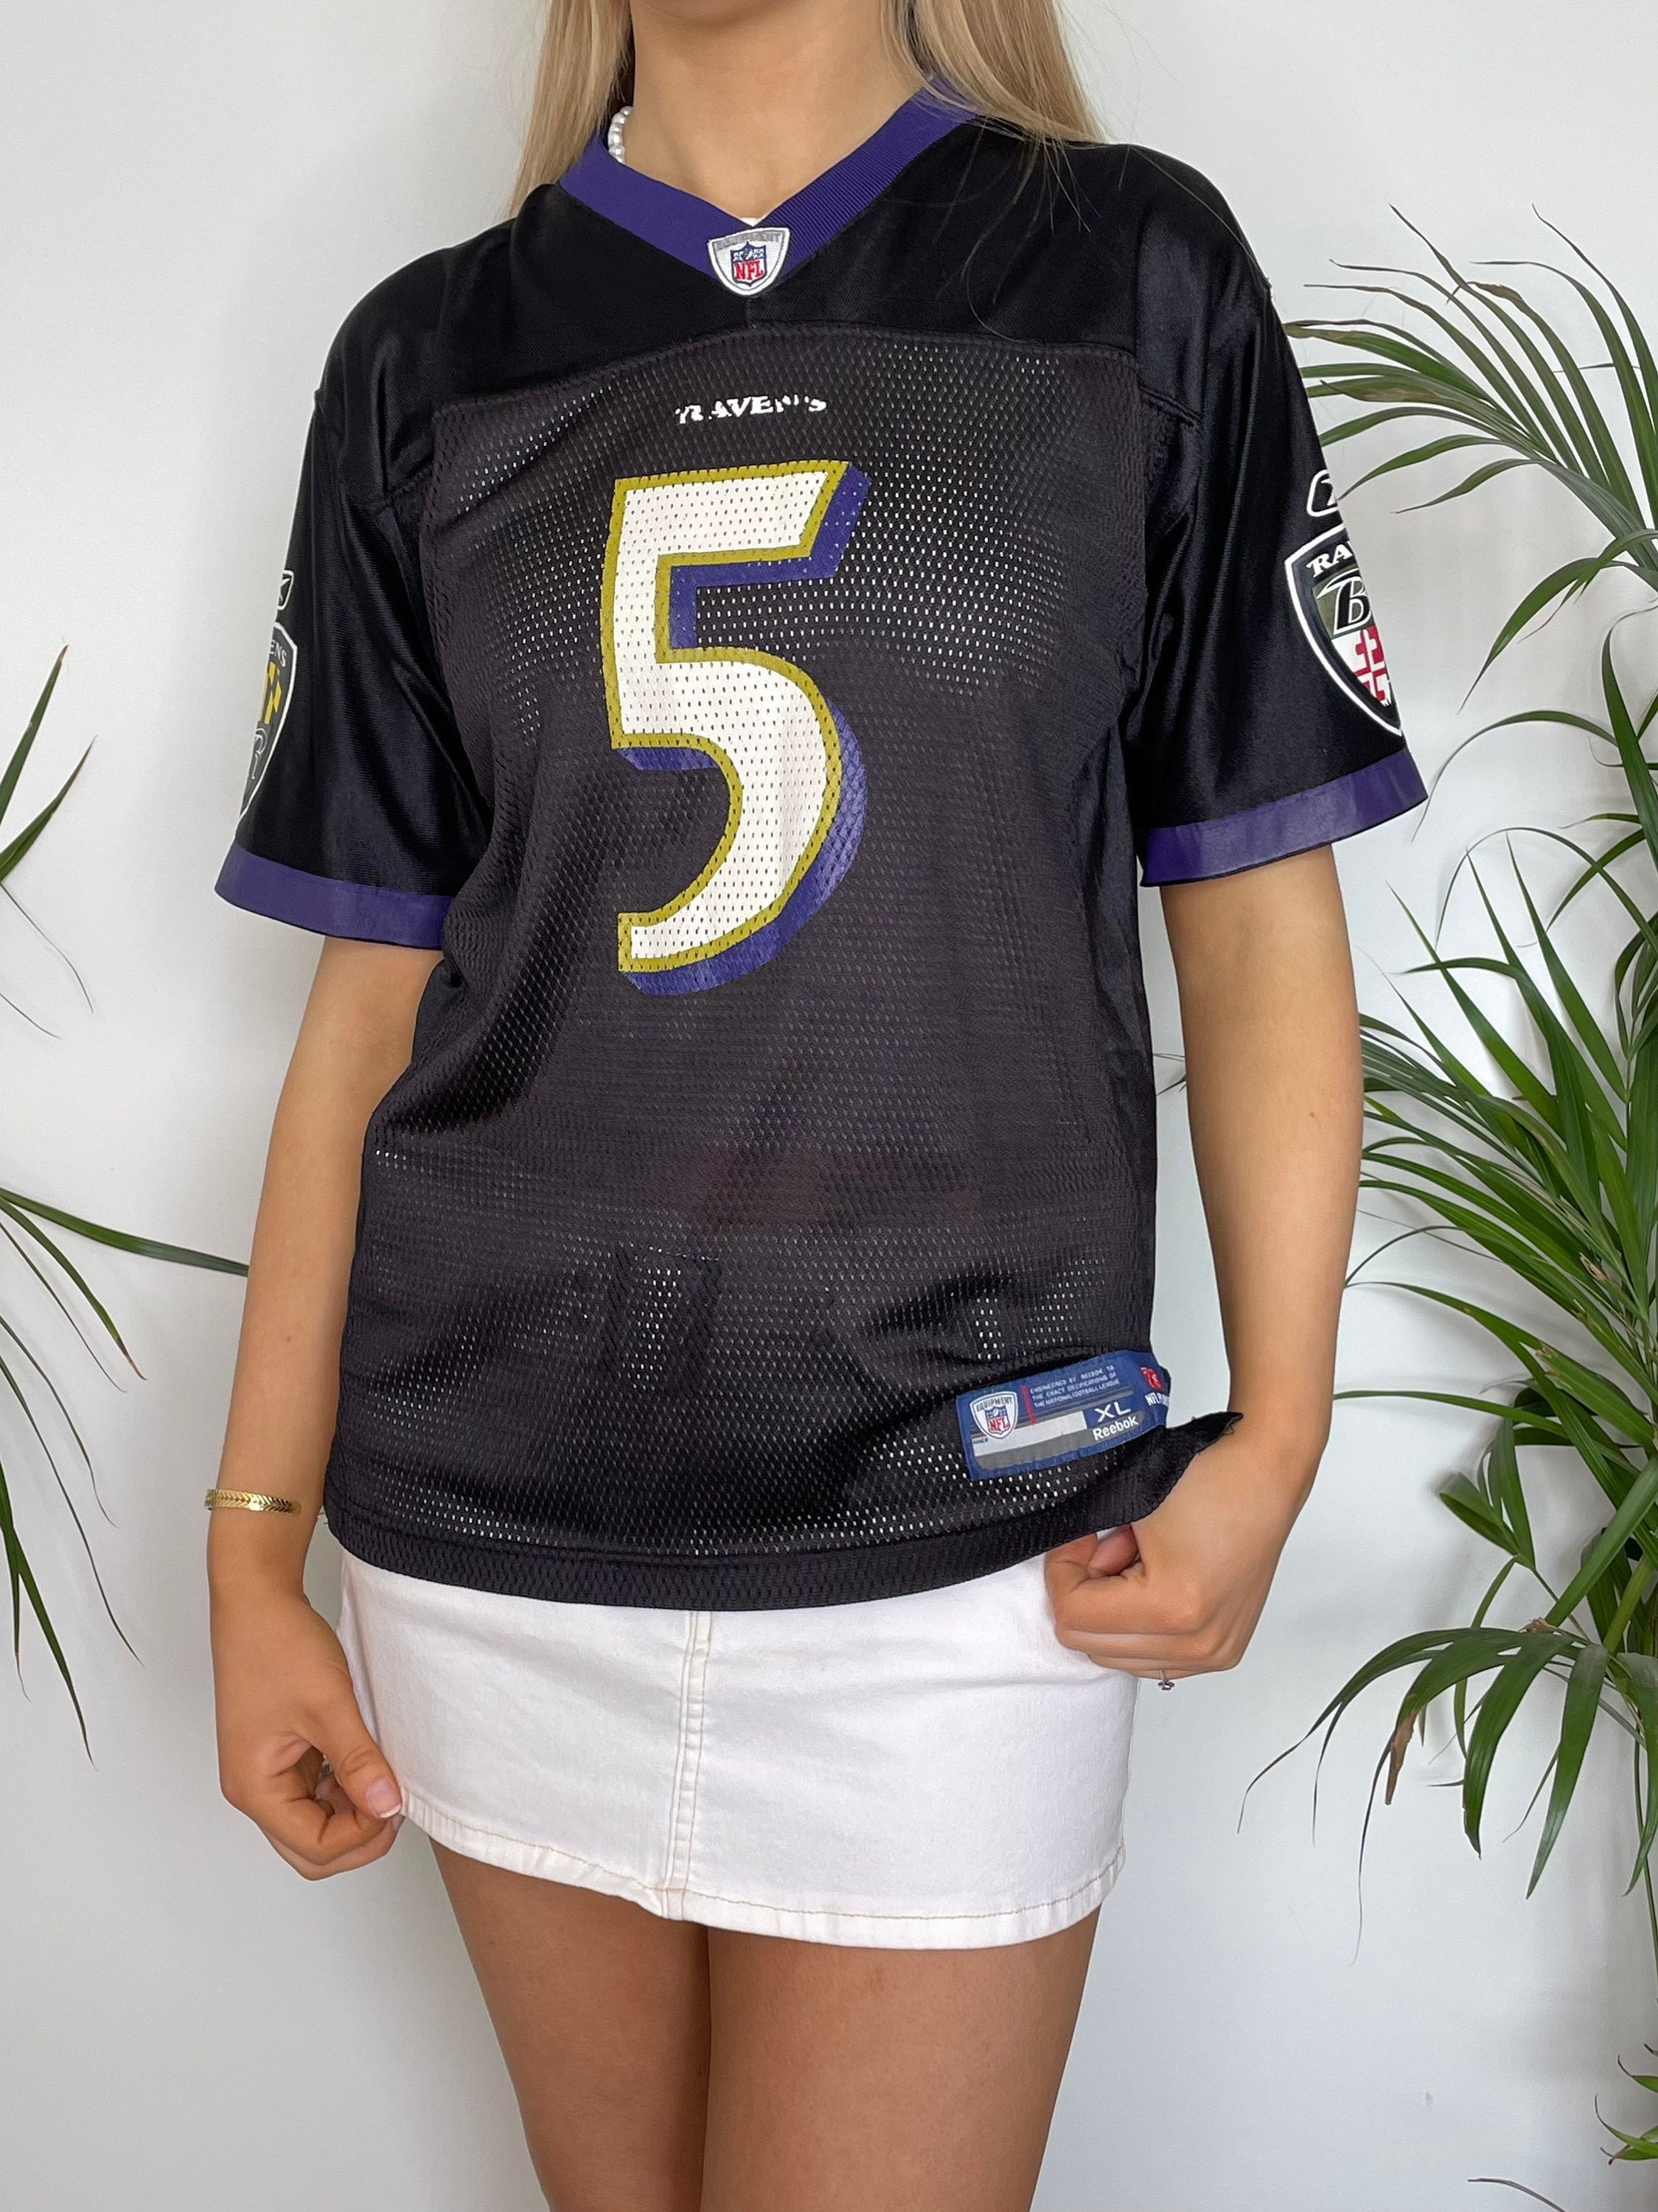 Vintage Reebok NFL Pro Sports Jersey T Shirt Black Purple Top 